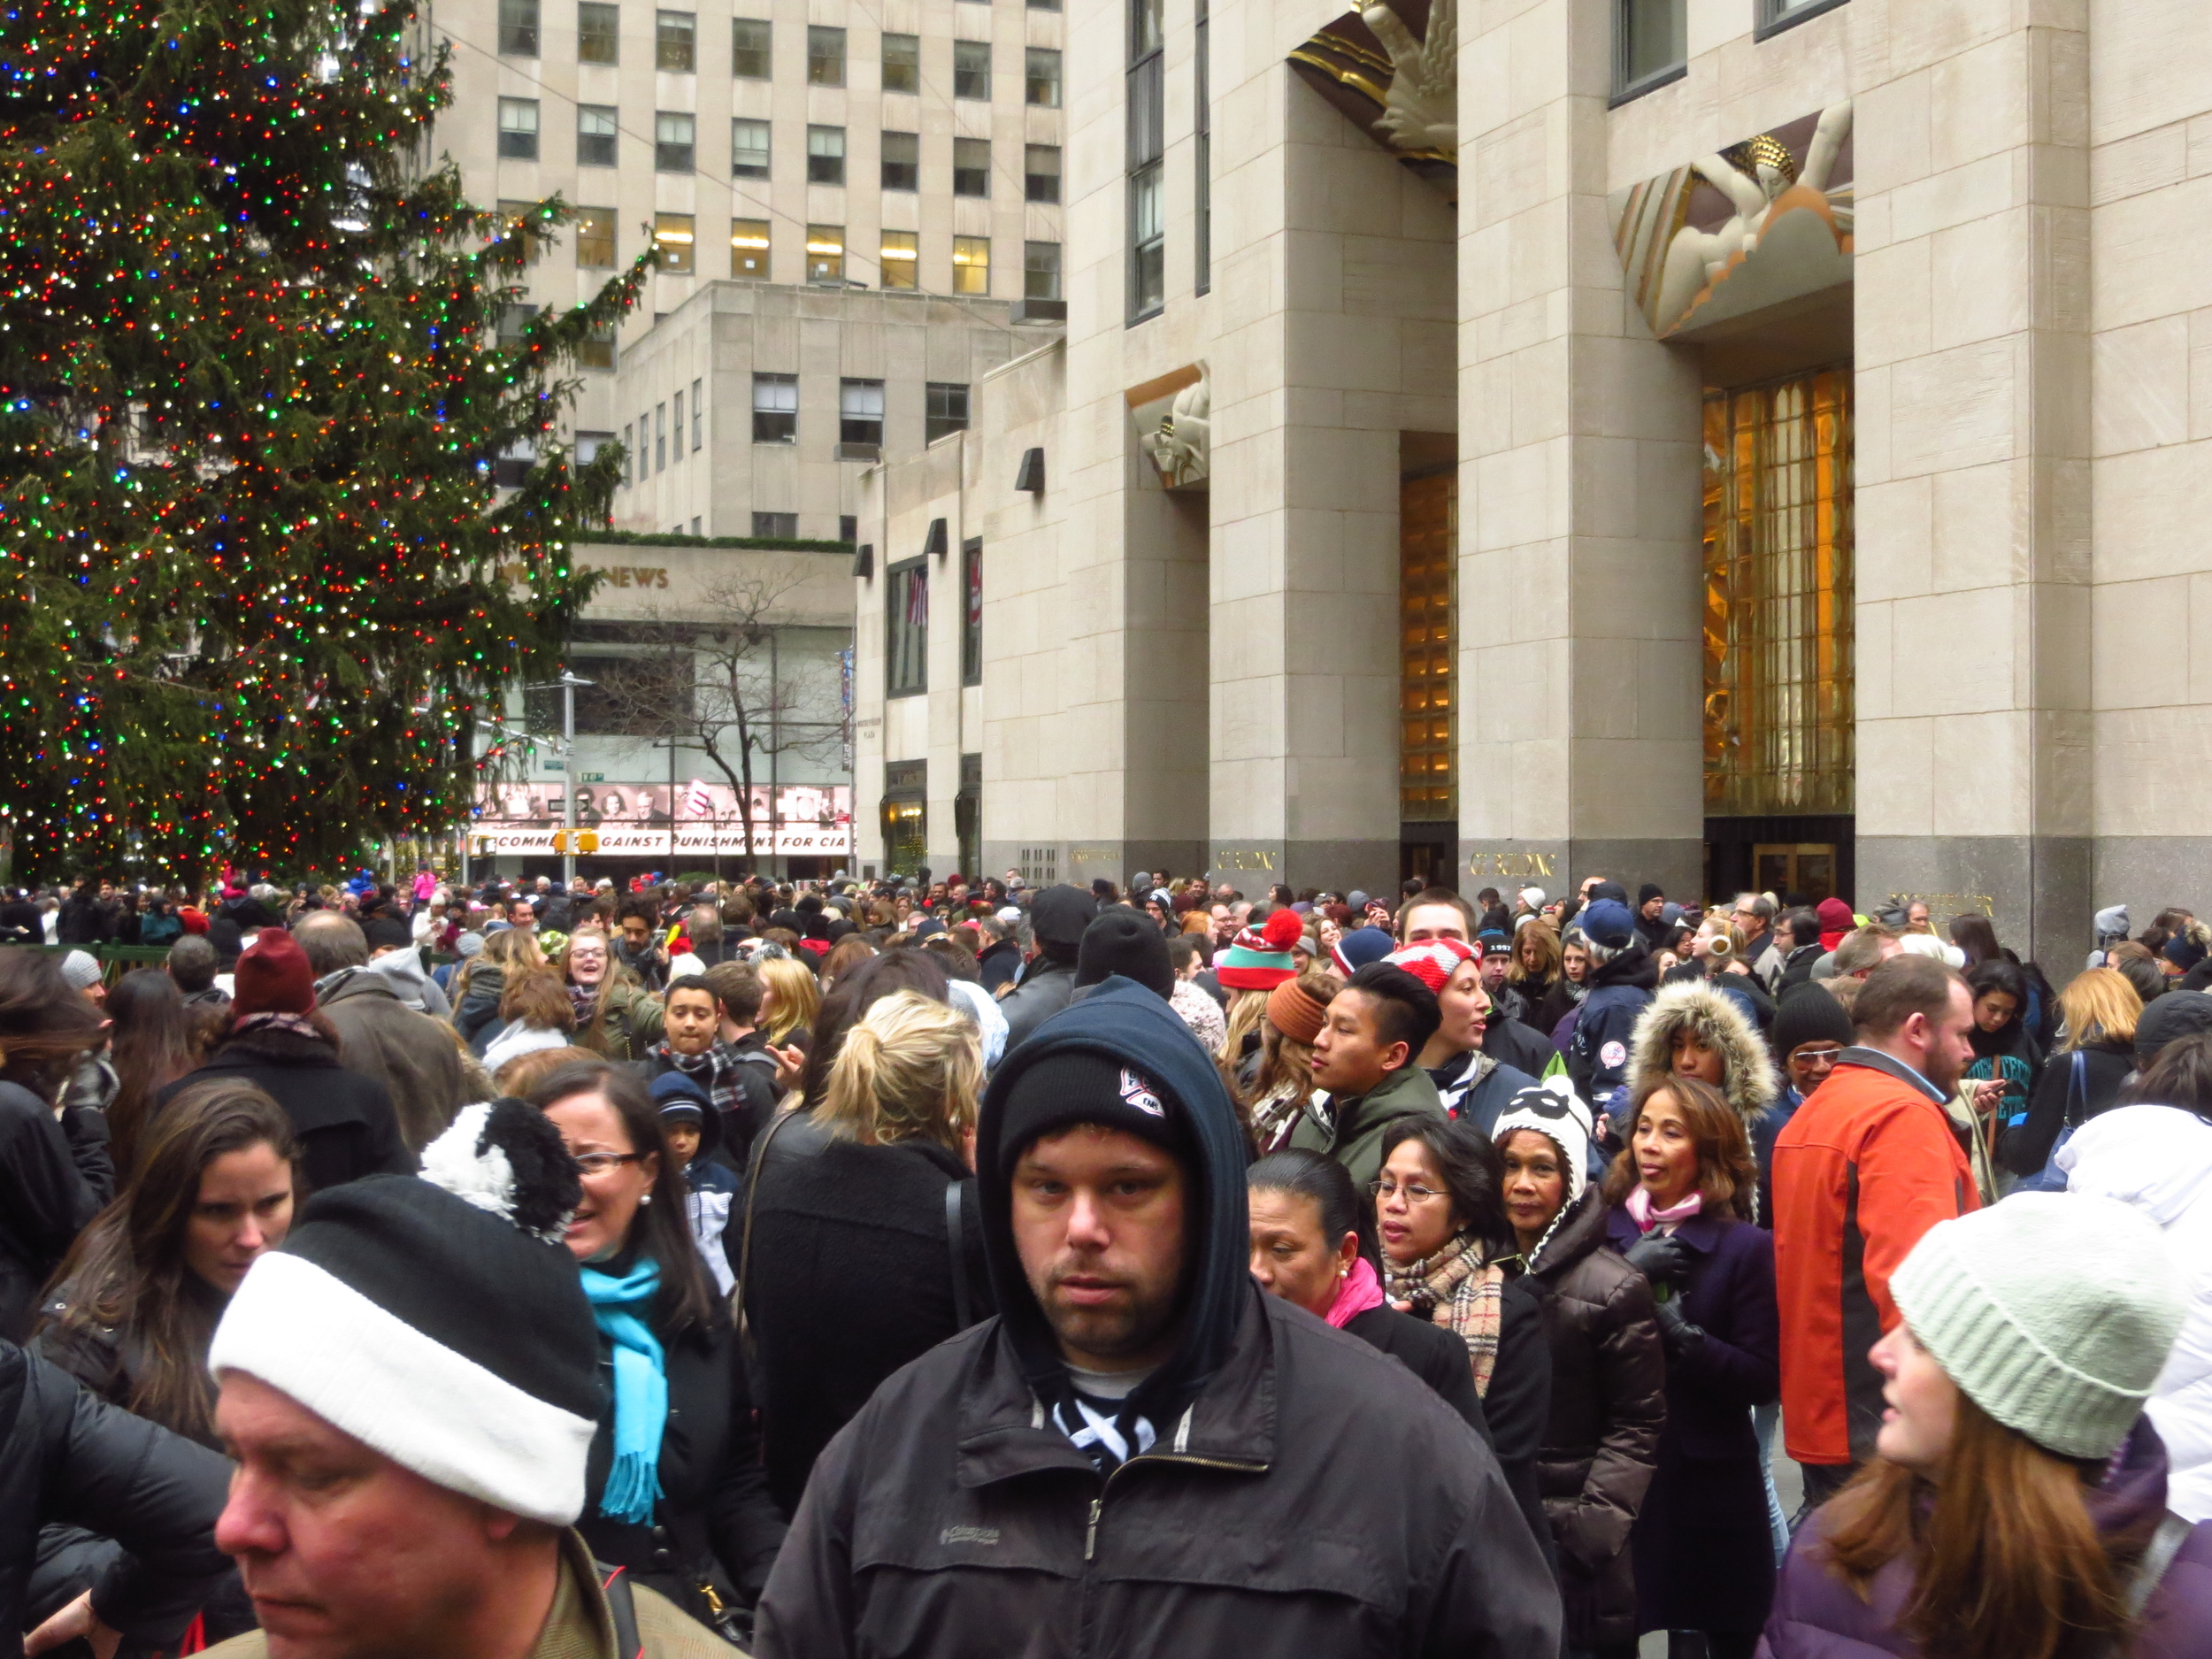 Rockefeller Christmas Tree madness